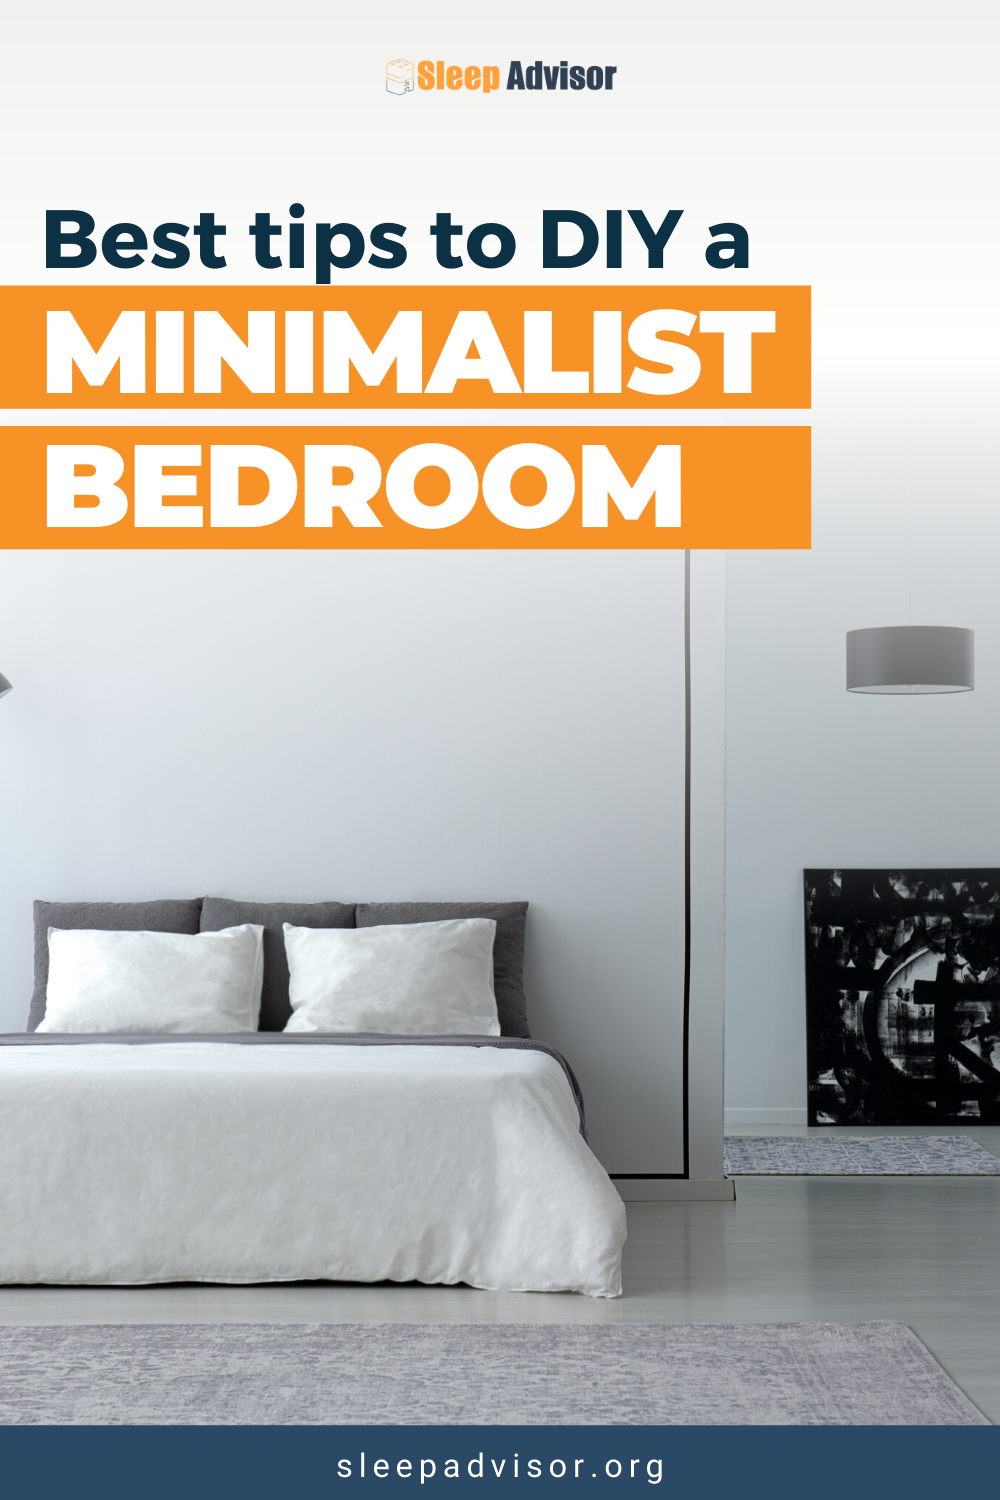 Minimalist Bedroom Ideas - 5 Reasons to Change Now | Sleep Advisor